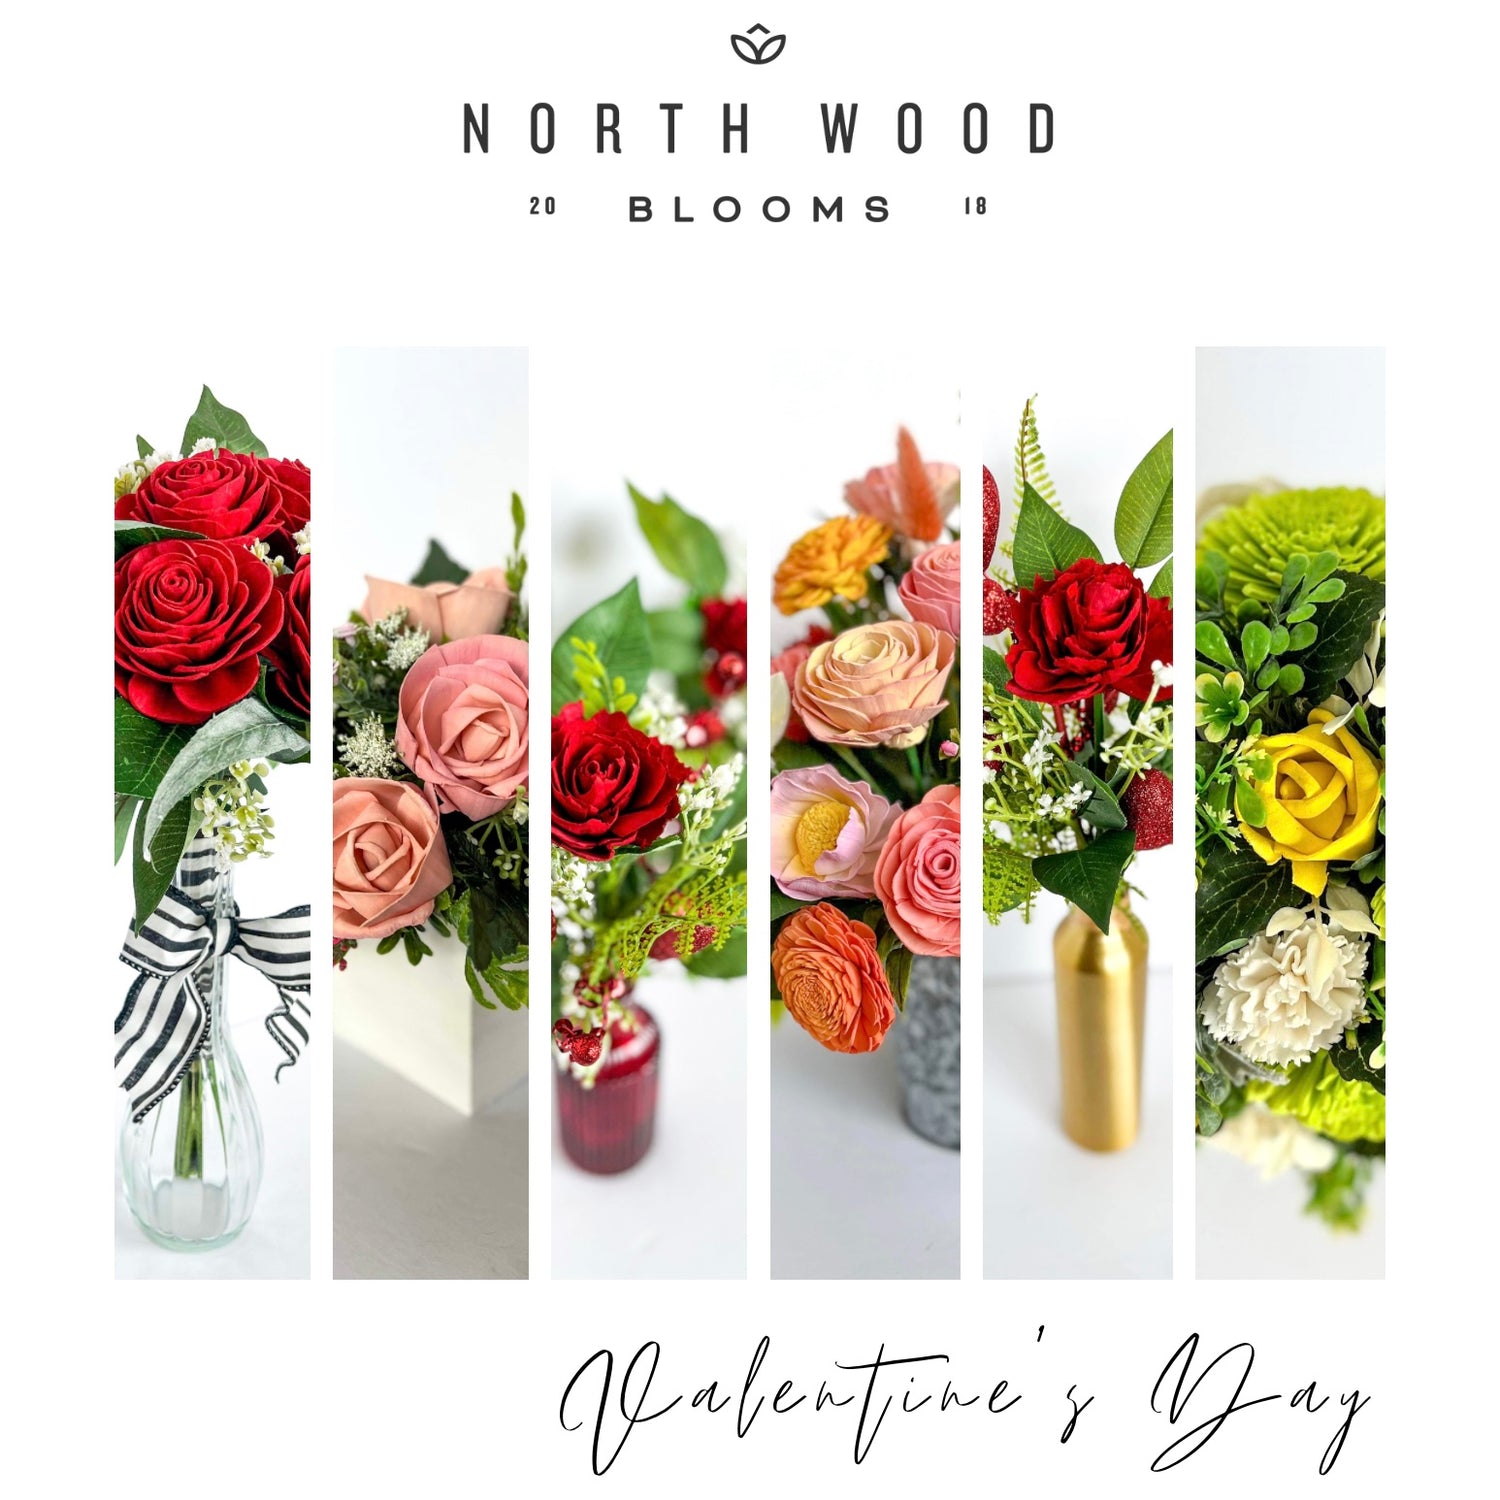 North wood blooms is a luxury wood flower florist in northern Wisconsin creating bespoke wood flower designs